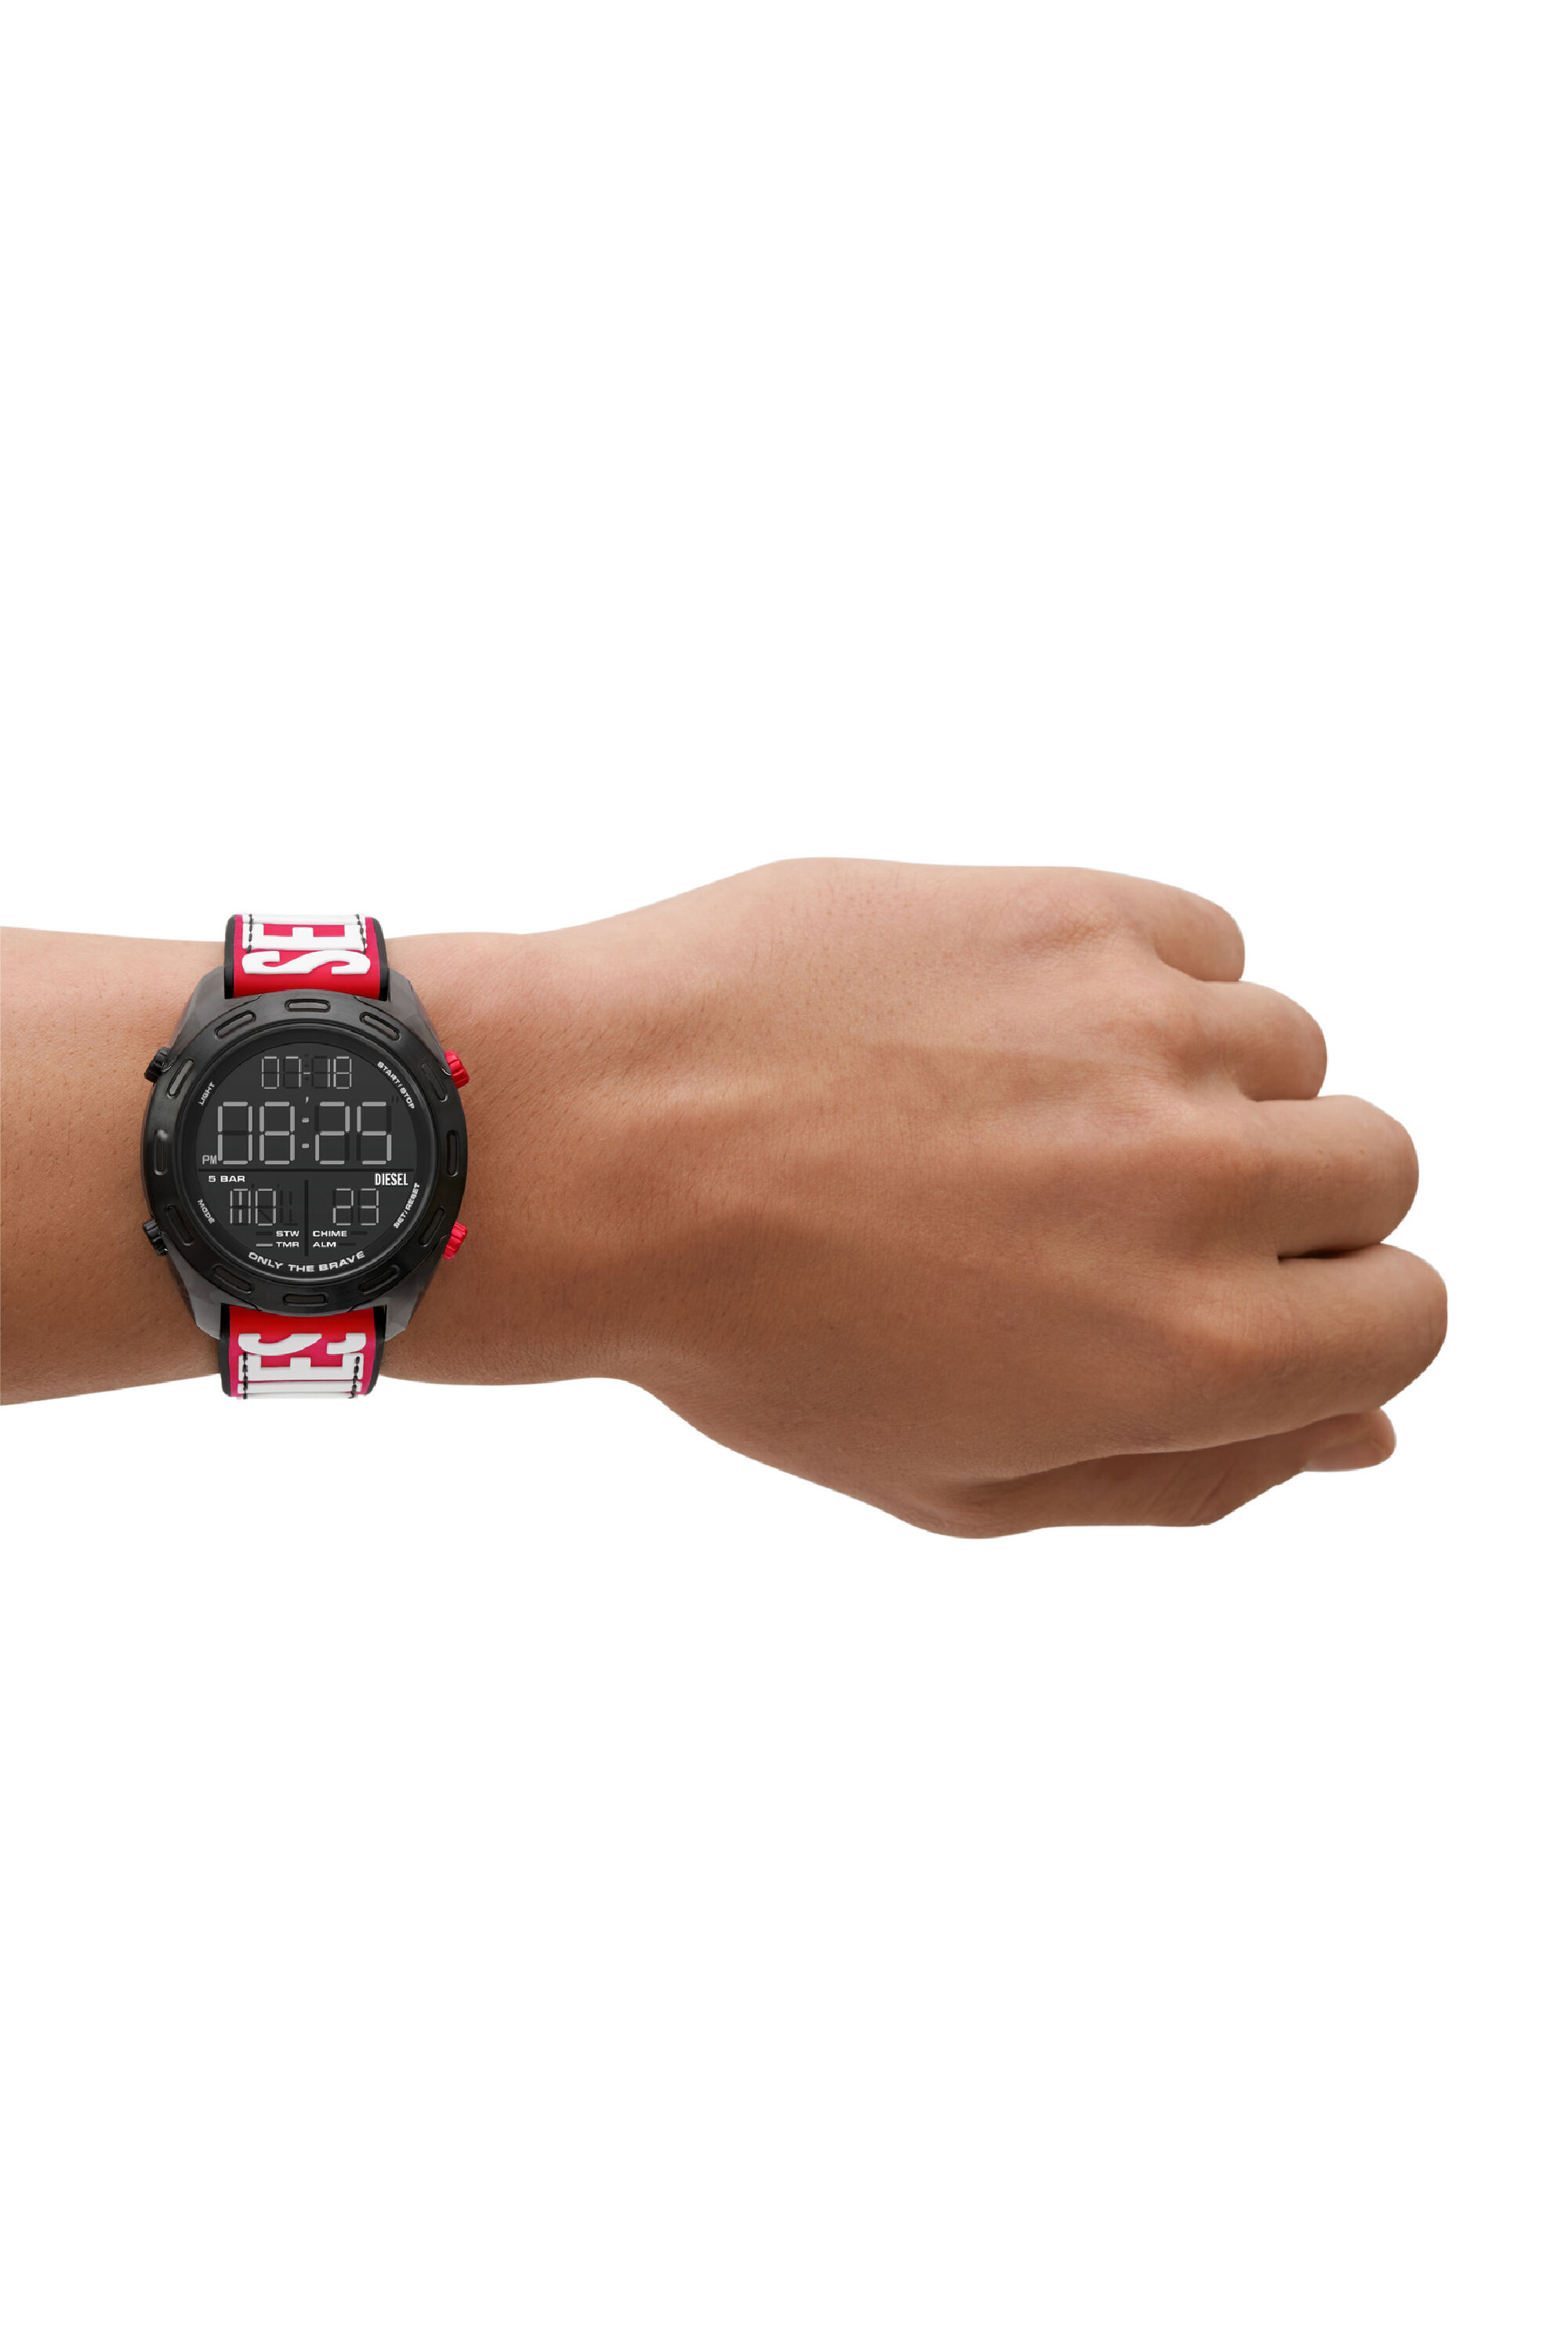 Men's Crusher Digital watch and interchangeable strap set